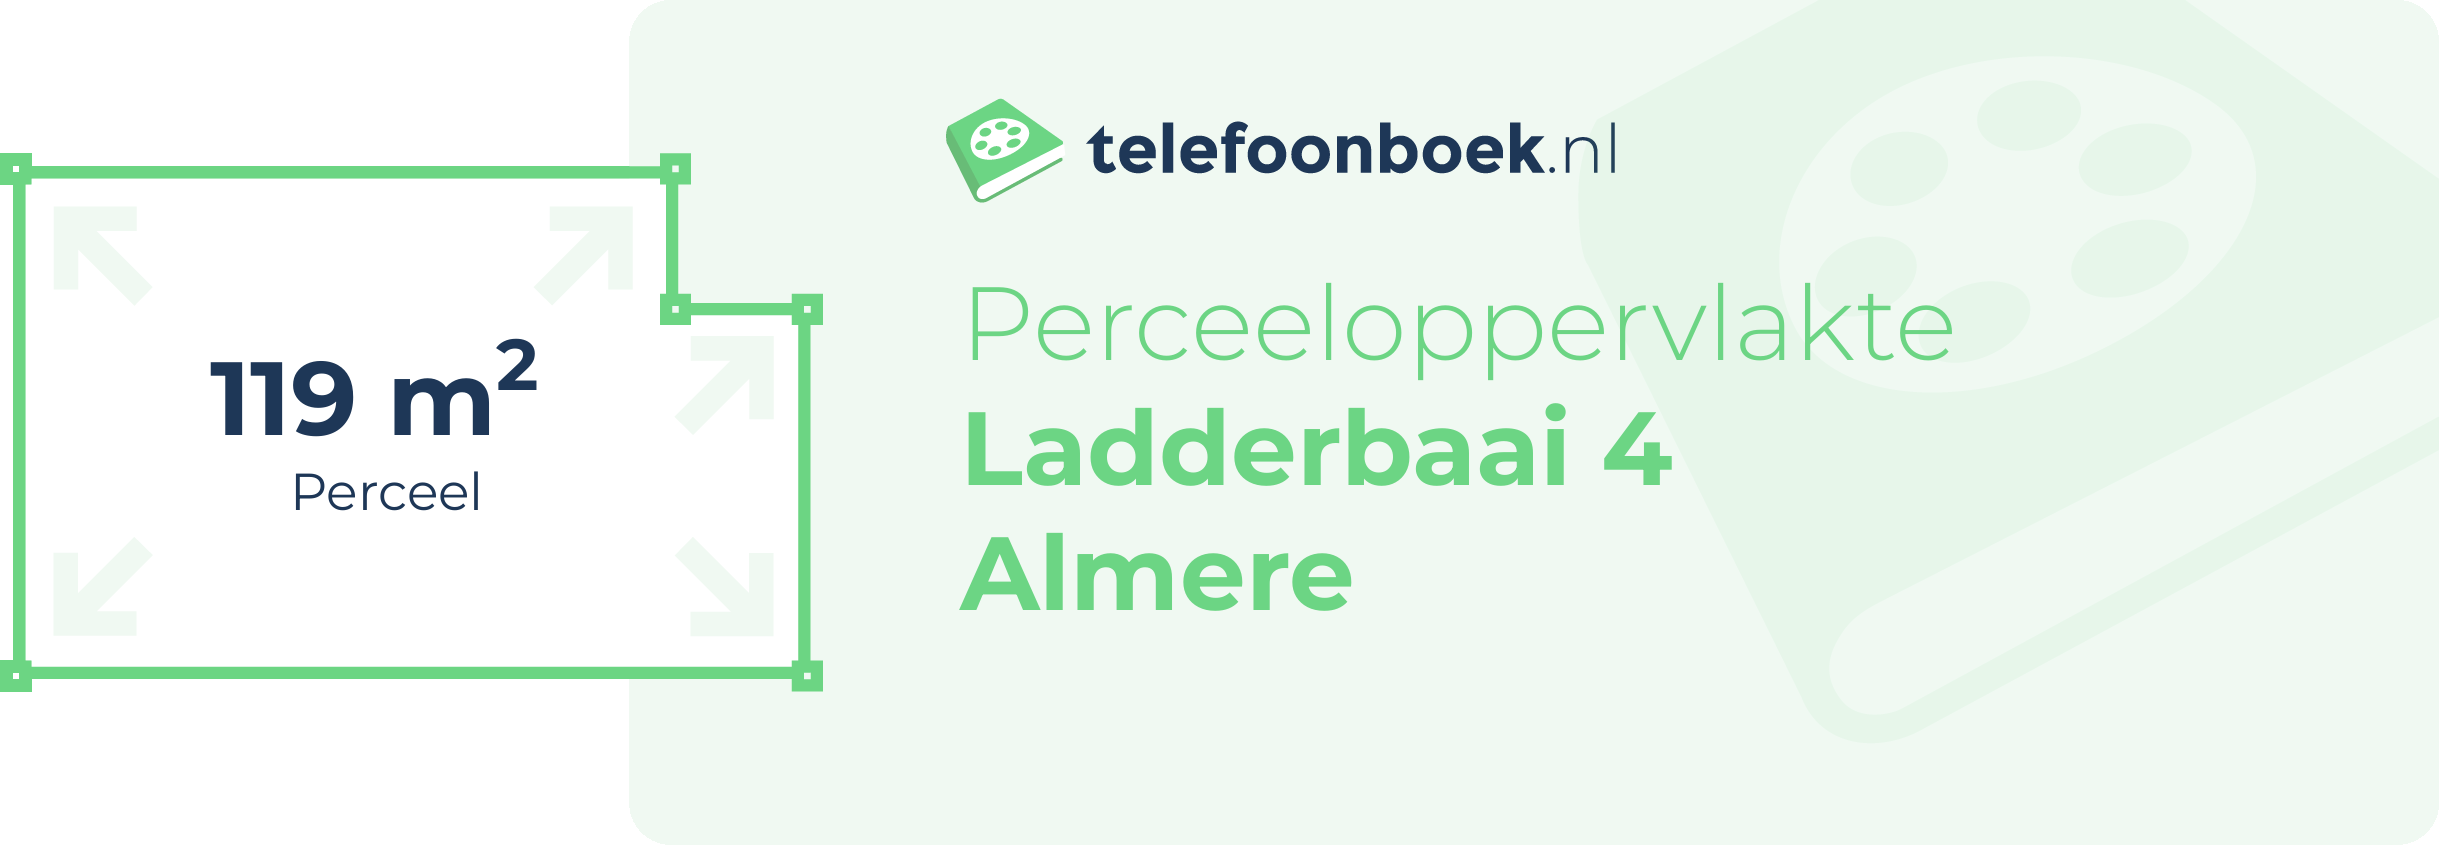 Perceeloppervlakte Ladderbaai 4 Almere